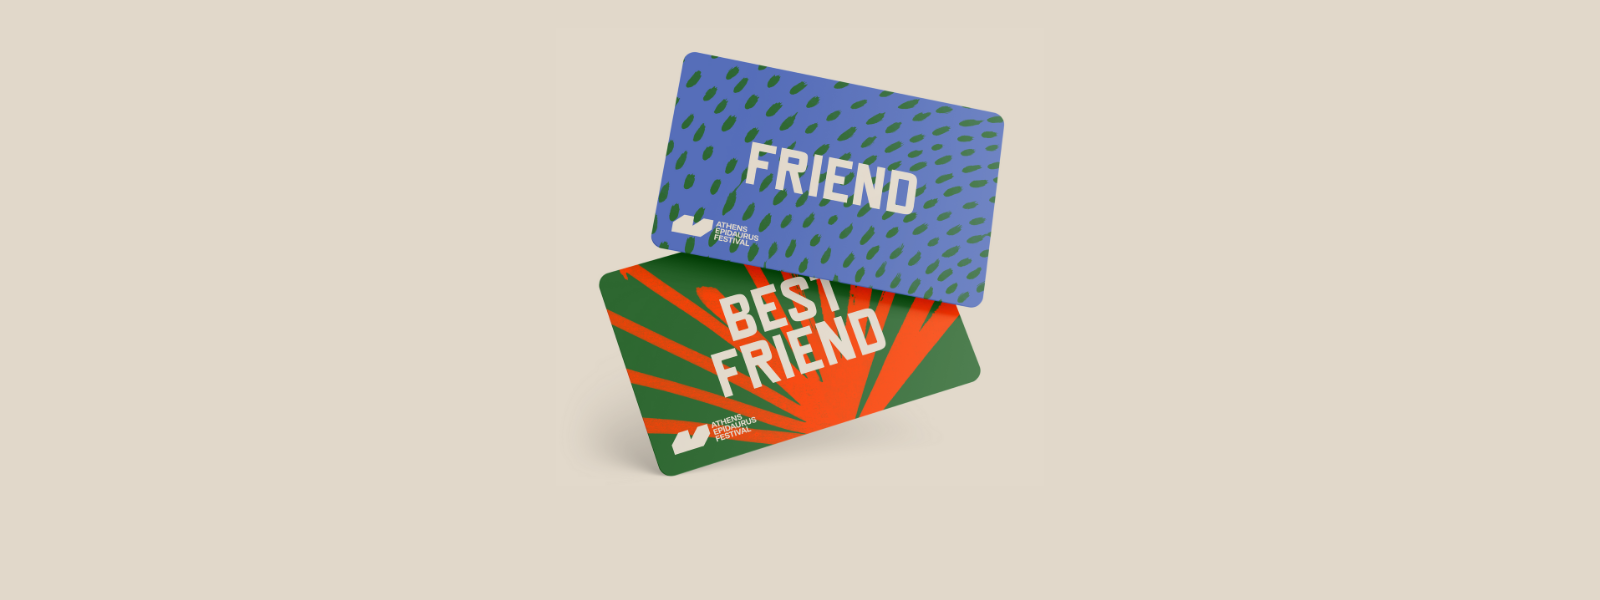 AEF Festival friend cards